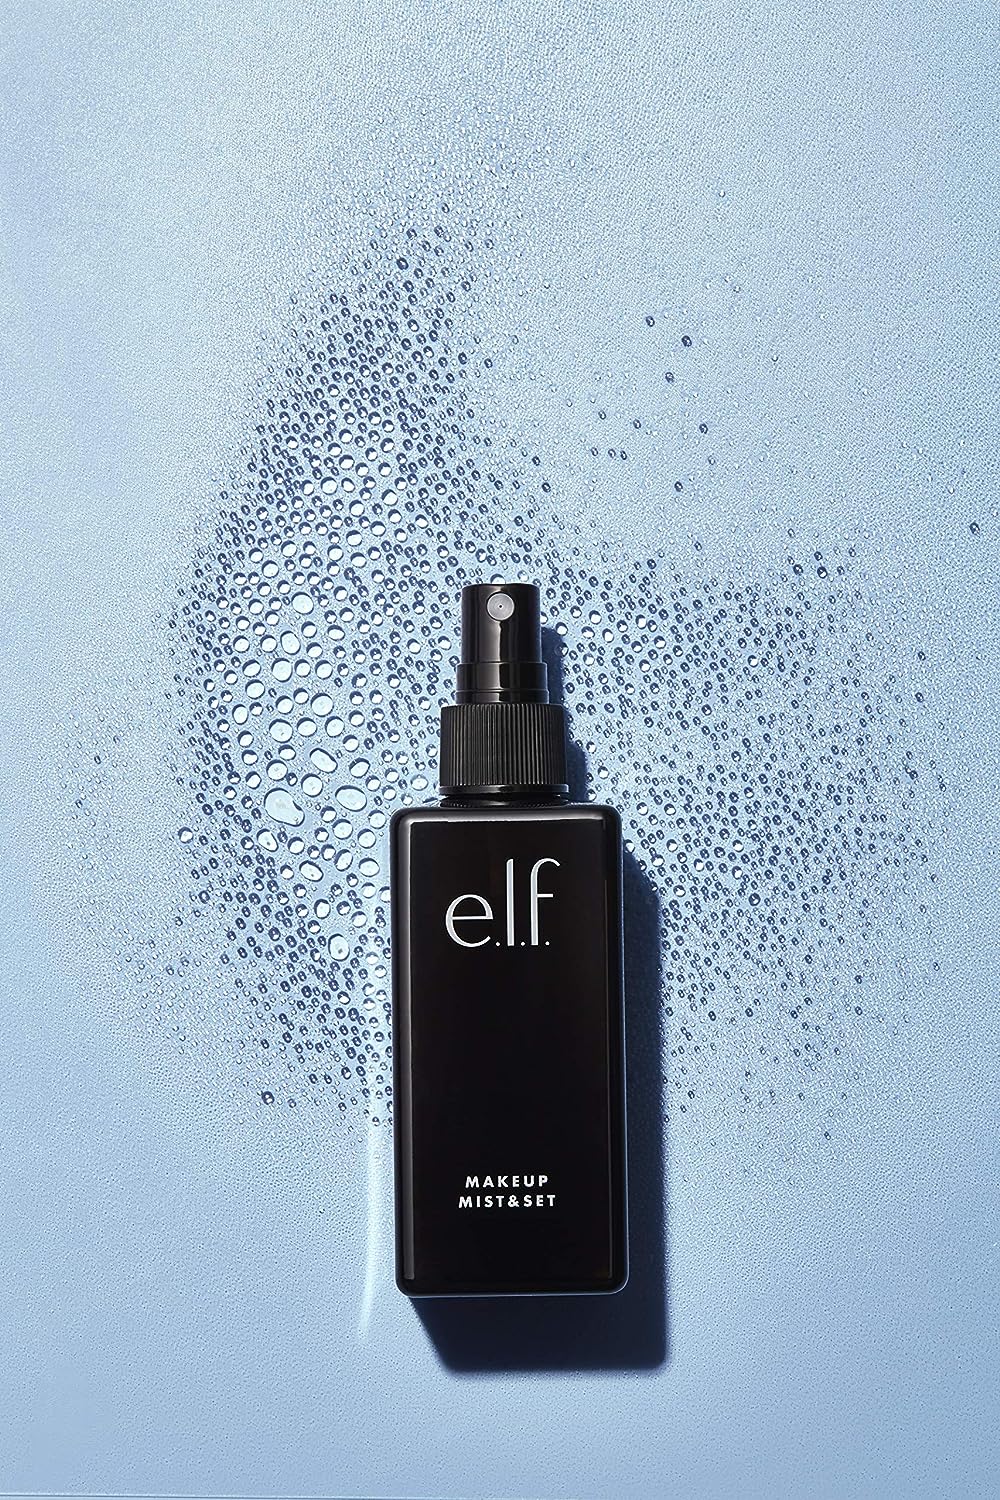 e.l.f. Makeup Mist Set - Large Lightweight, Long Lasting, All-Day We Shopperss